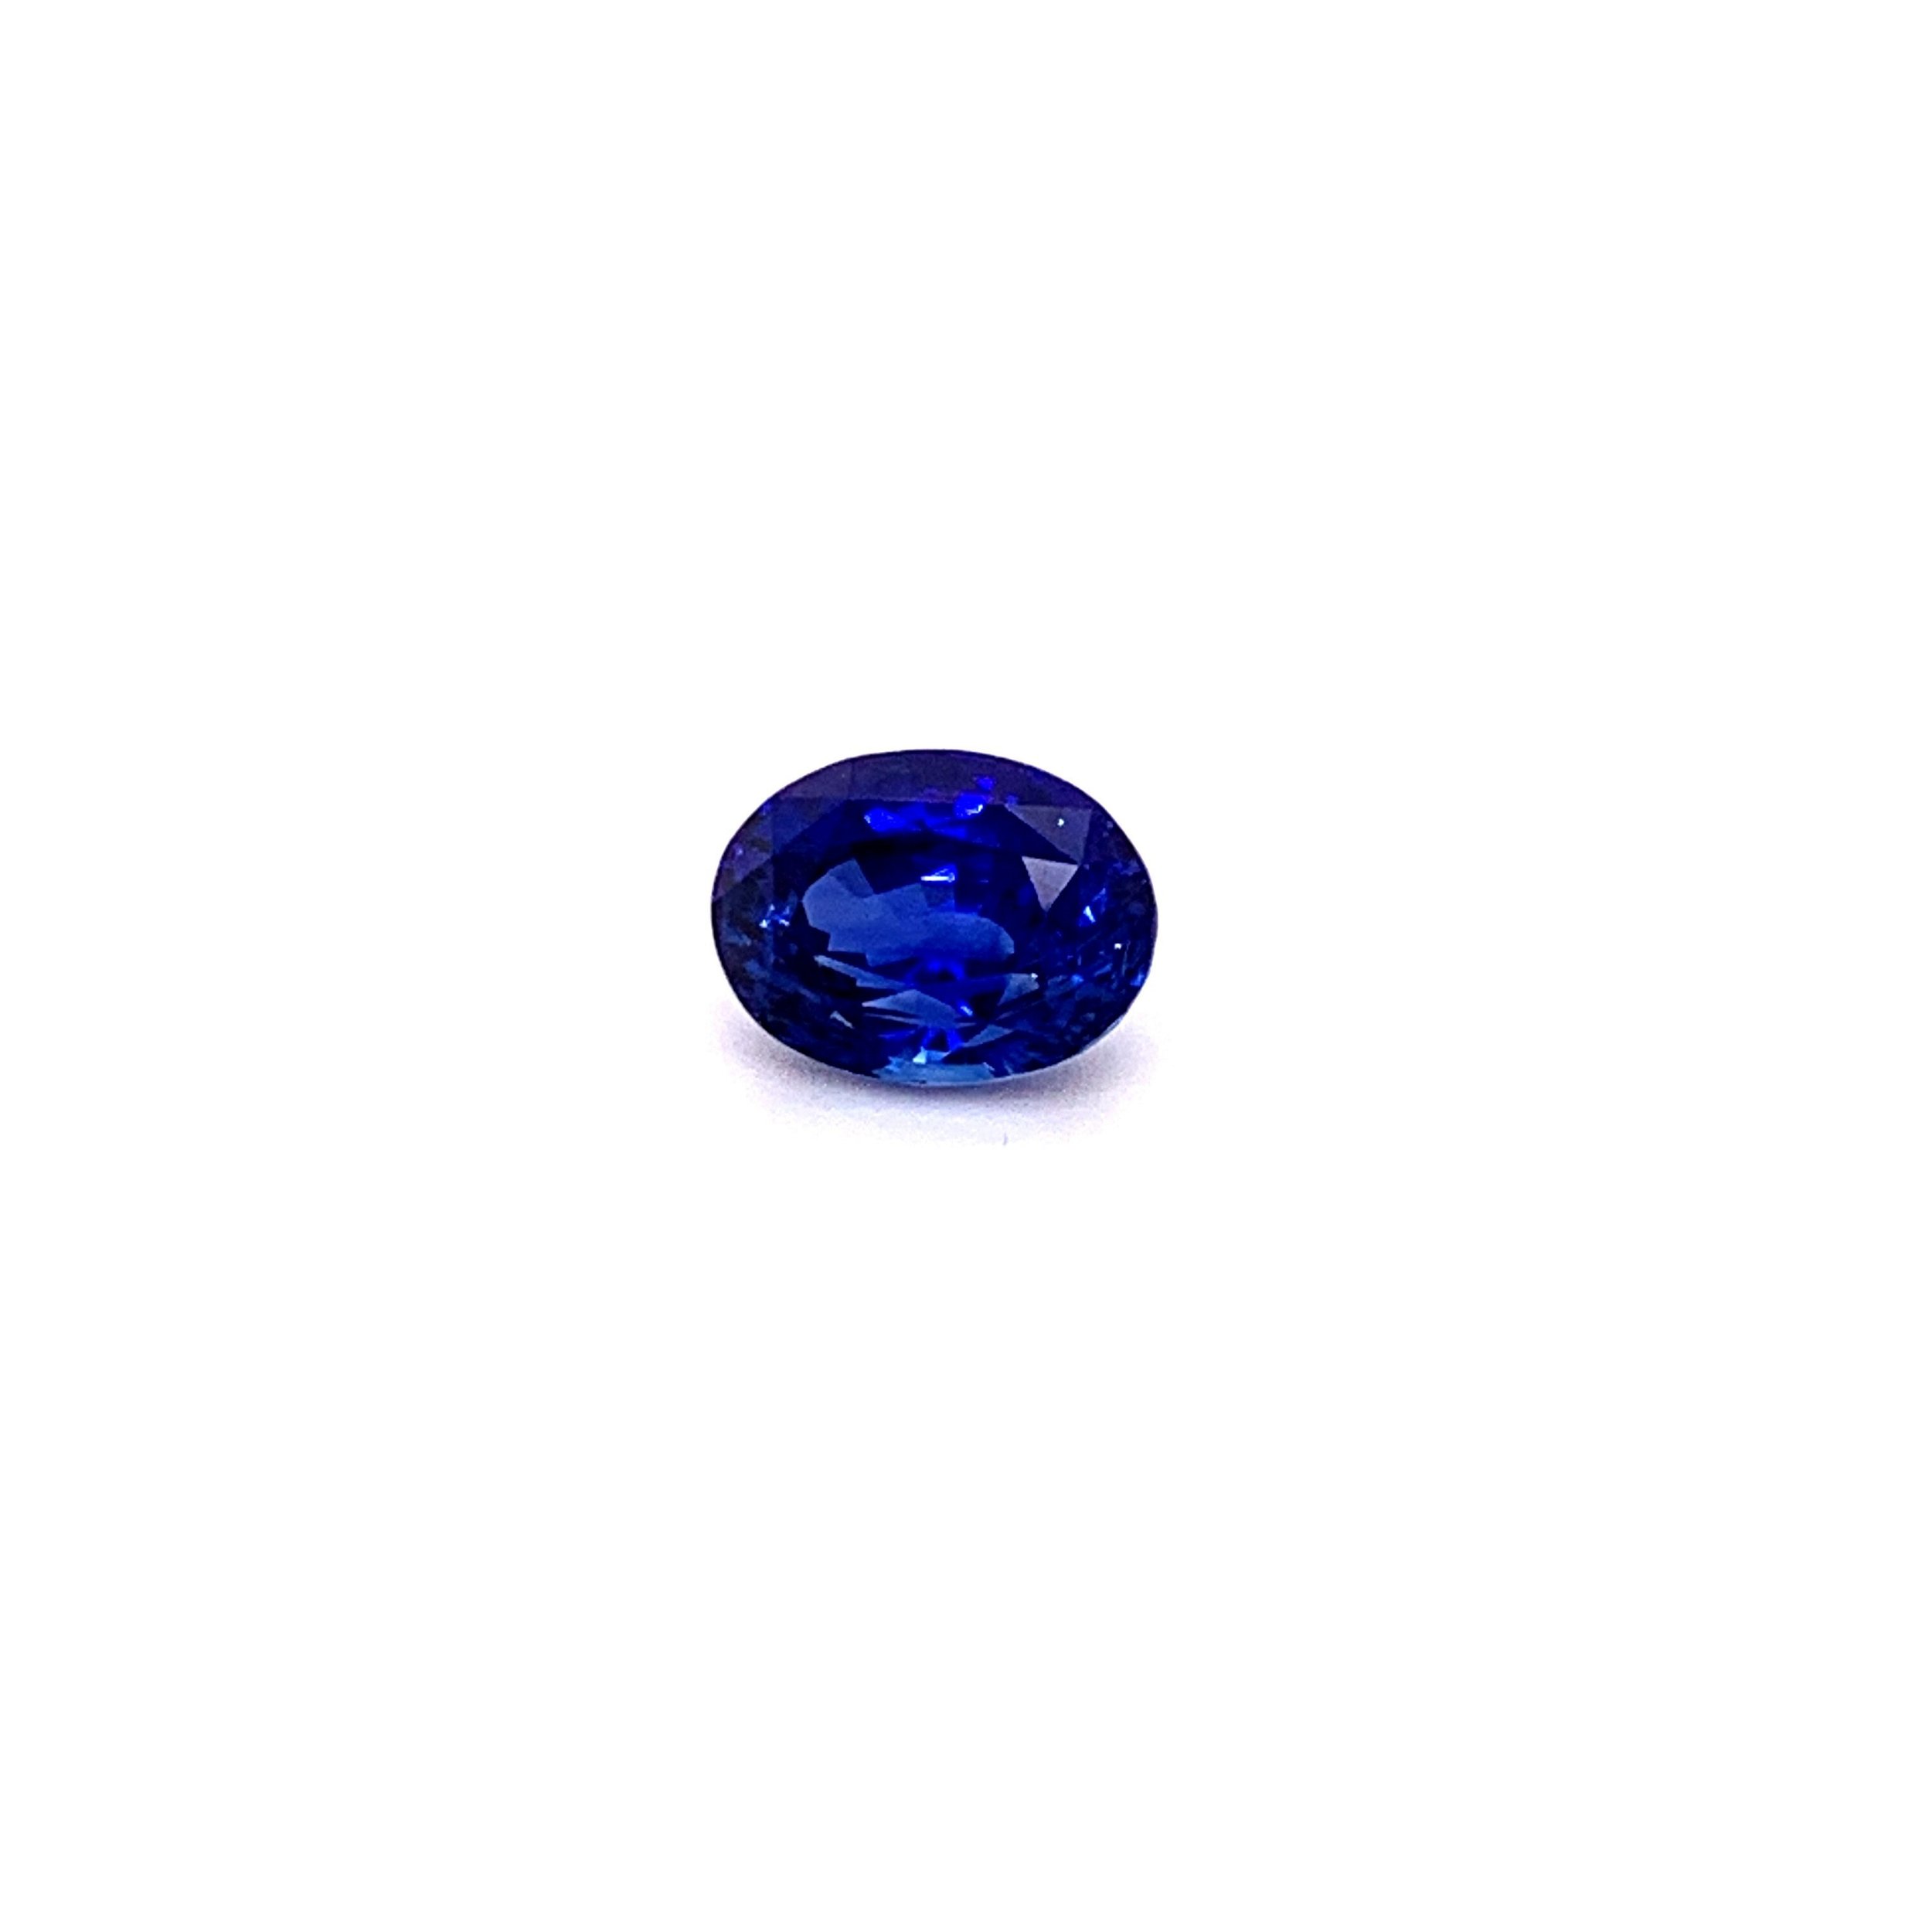 5.520ct Oval Cut, Blue Sapphire - AGL 1108913